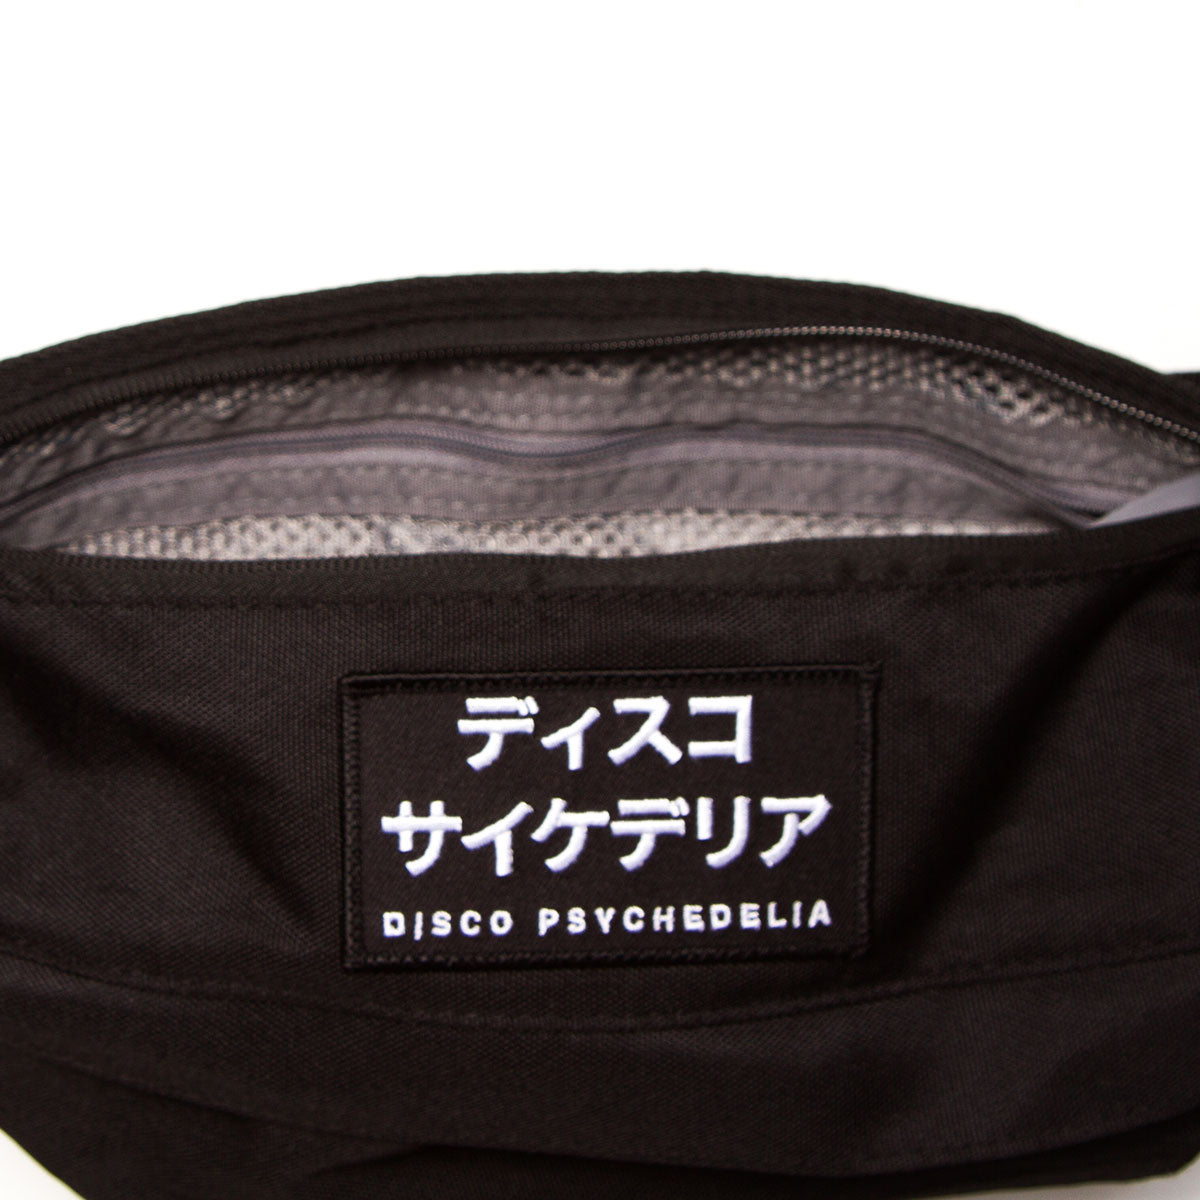 Disco Psychedelia - Bum Bag Regular - Black - Wasted Heroes